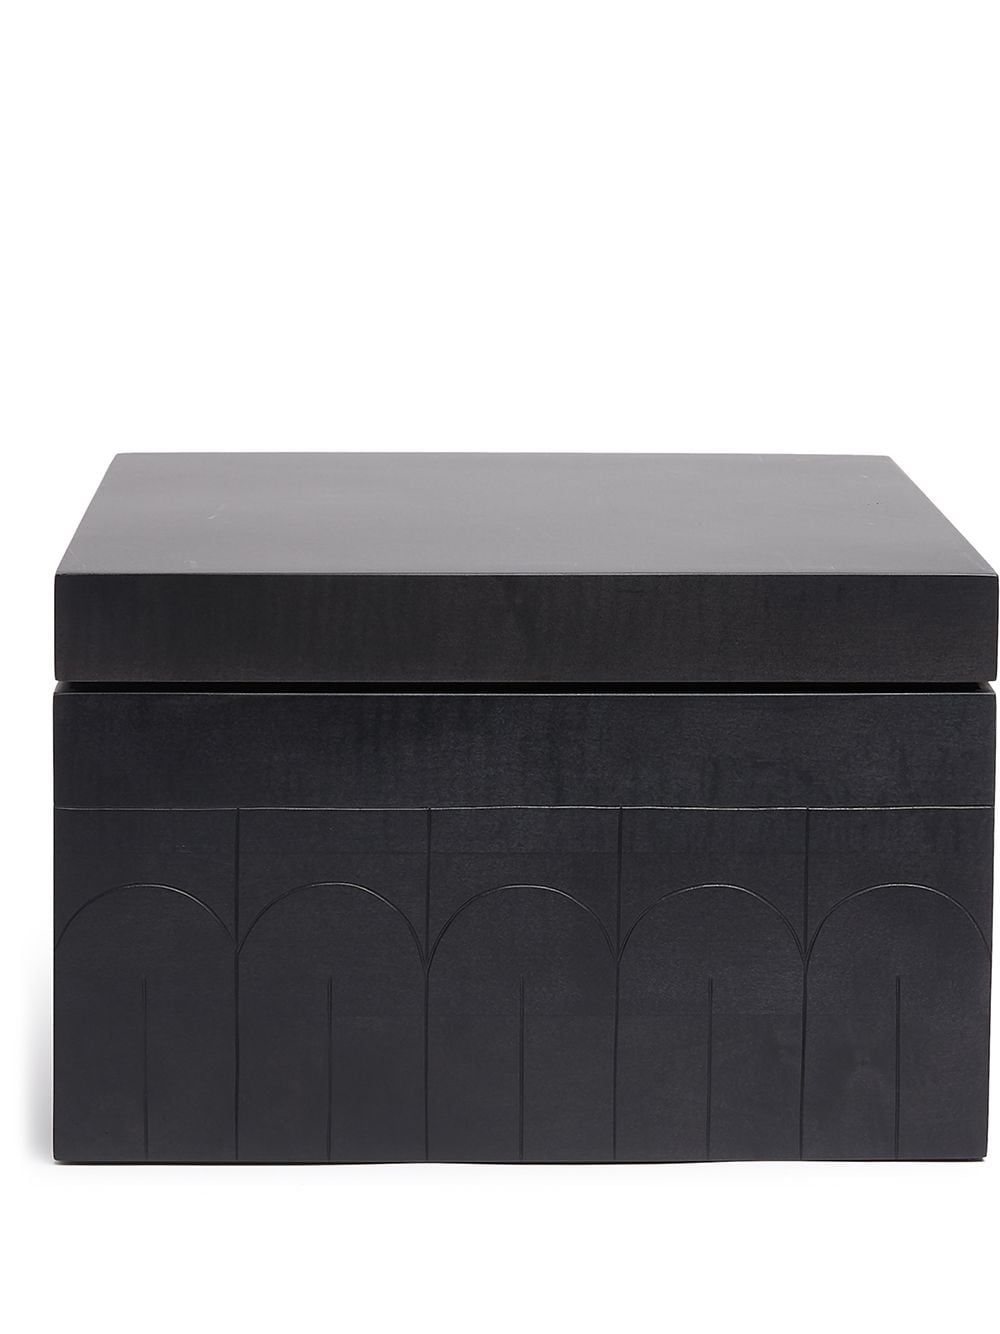 Zanat Branco storage box (38cm) - Black von Zanat